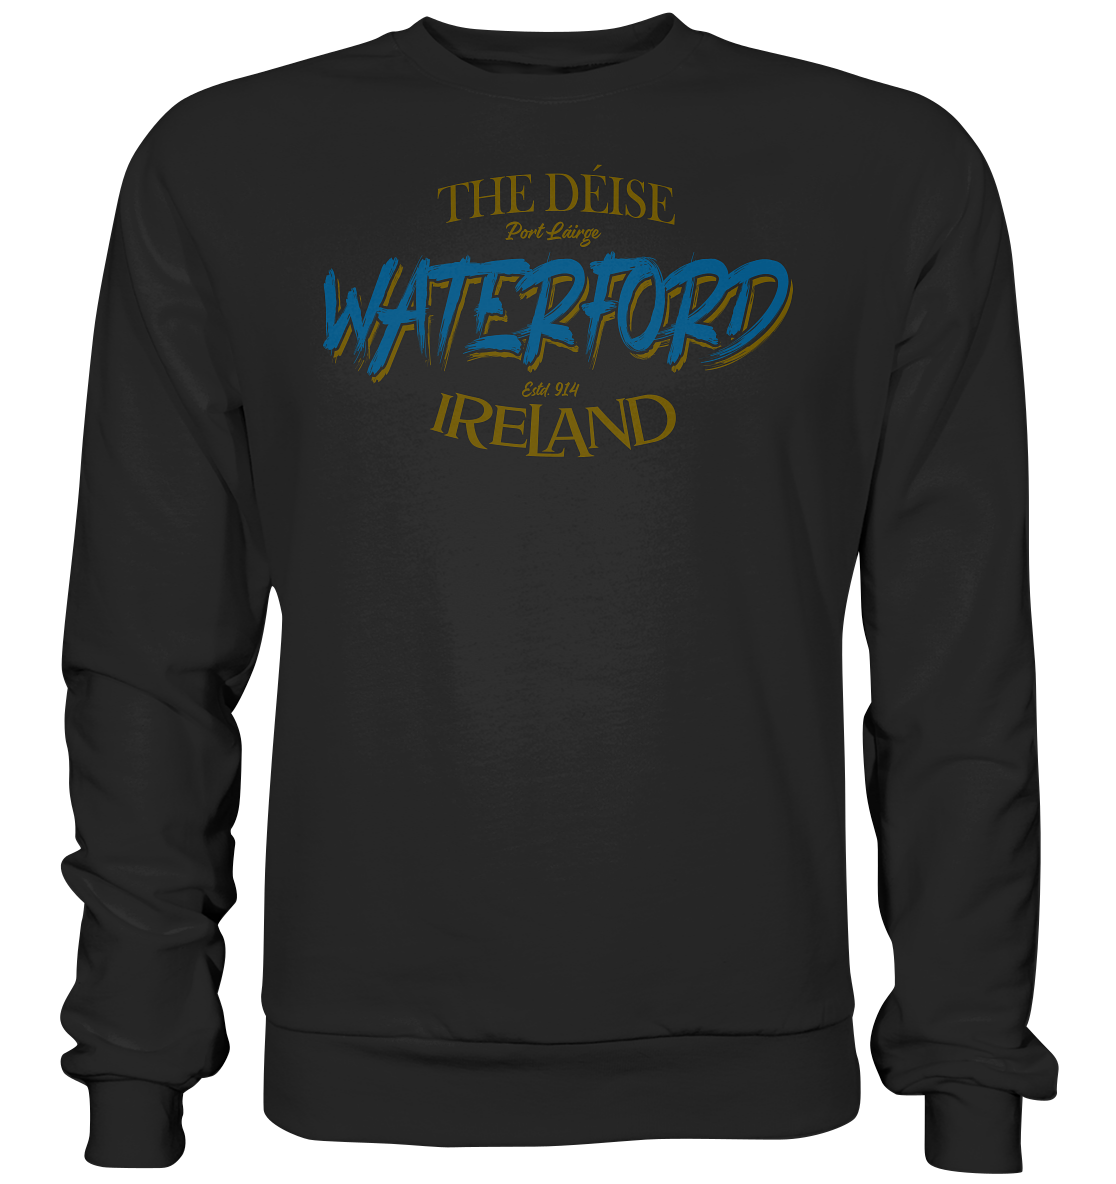 Waterford "The Déise" - Premium Sweatshirt